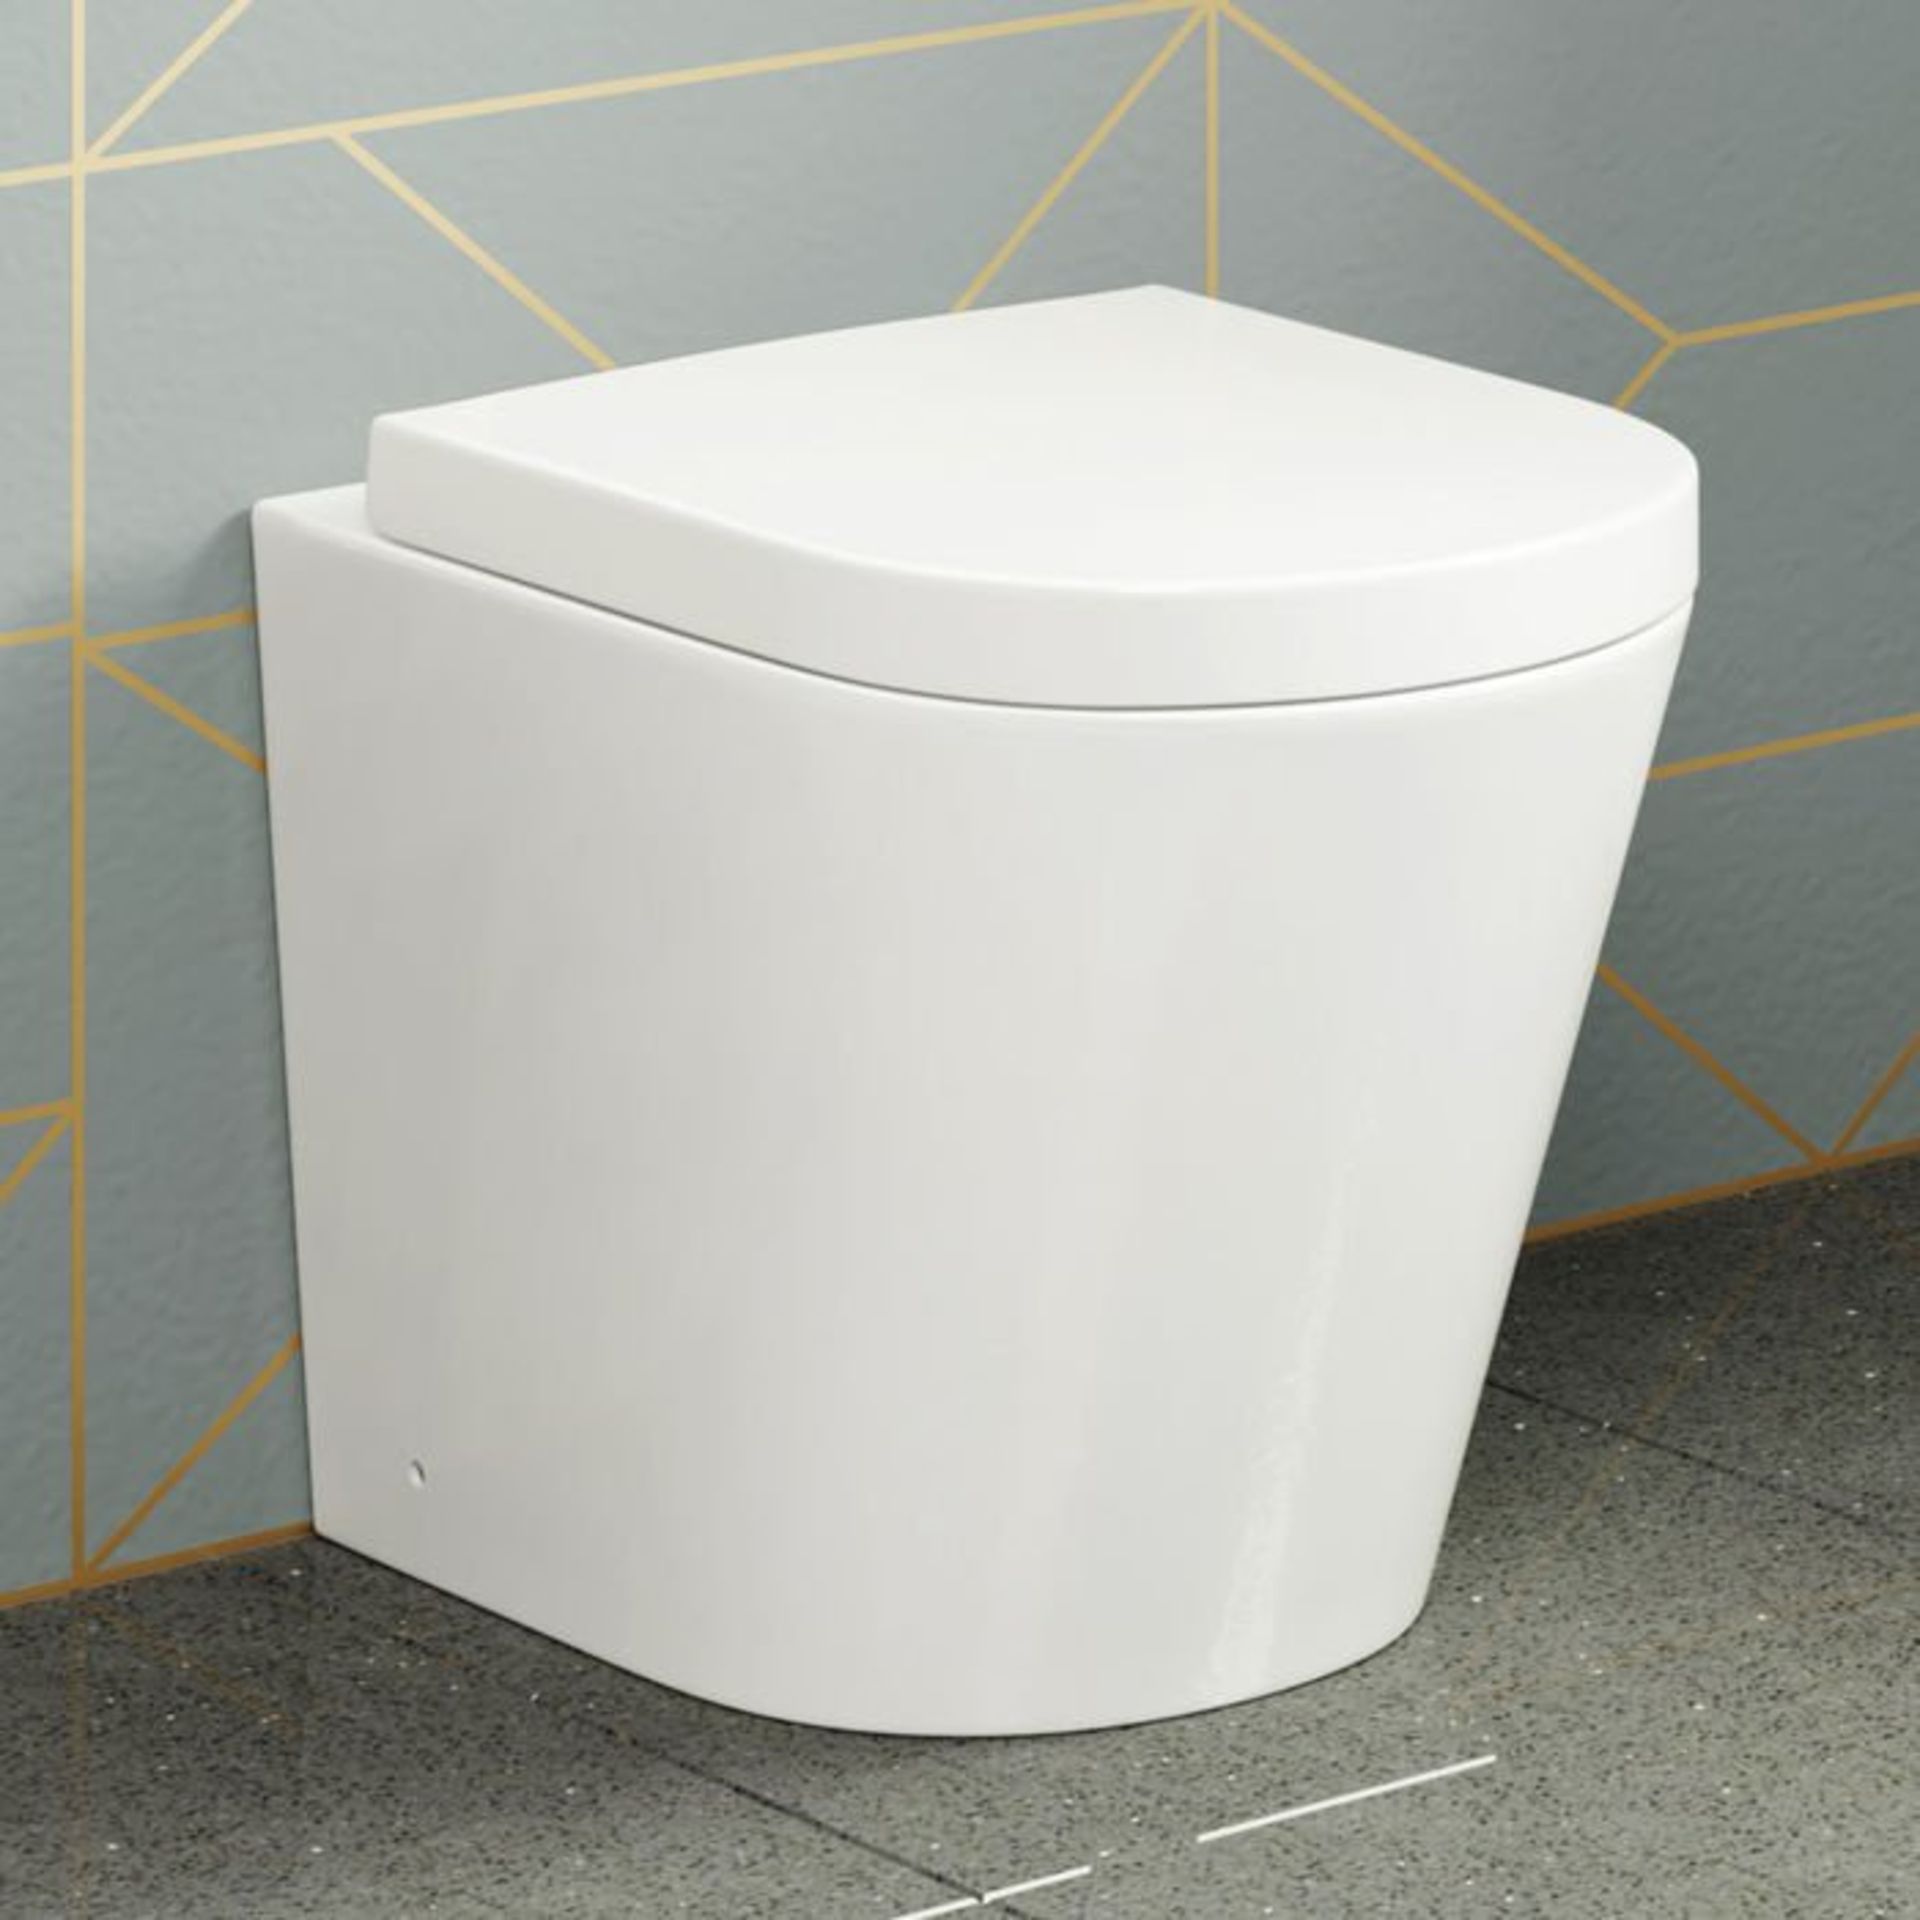 (U24) Lyon Back to Wall Toilet inc Luxury Soft Close Seat. Our Lyon back to wall toilet is made from